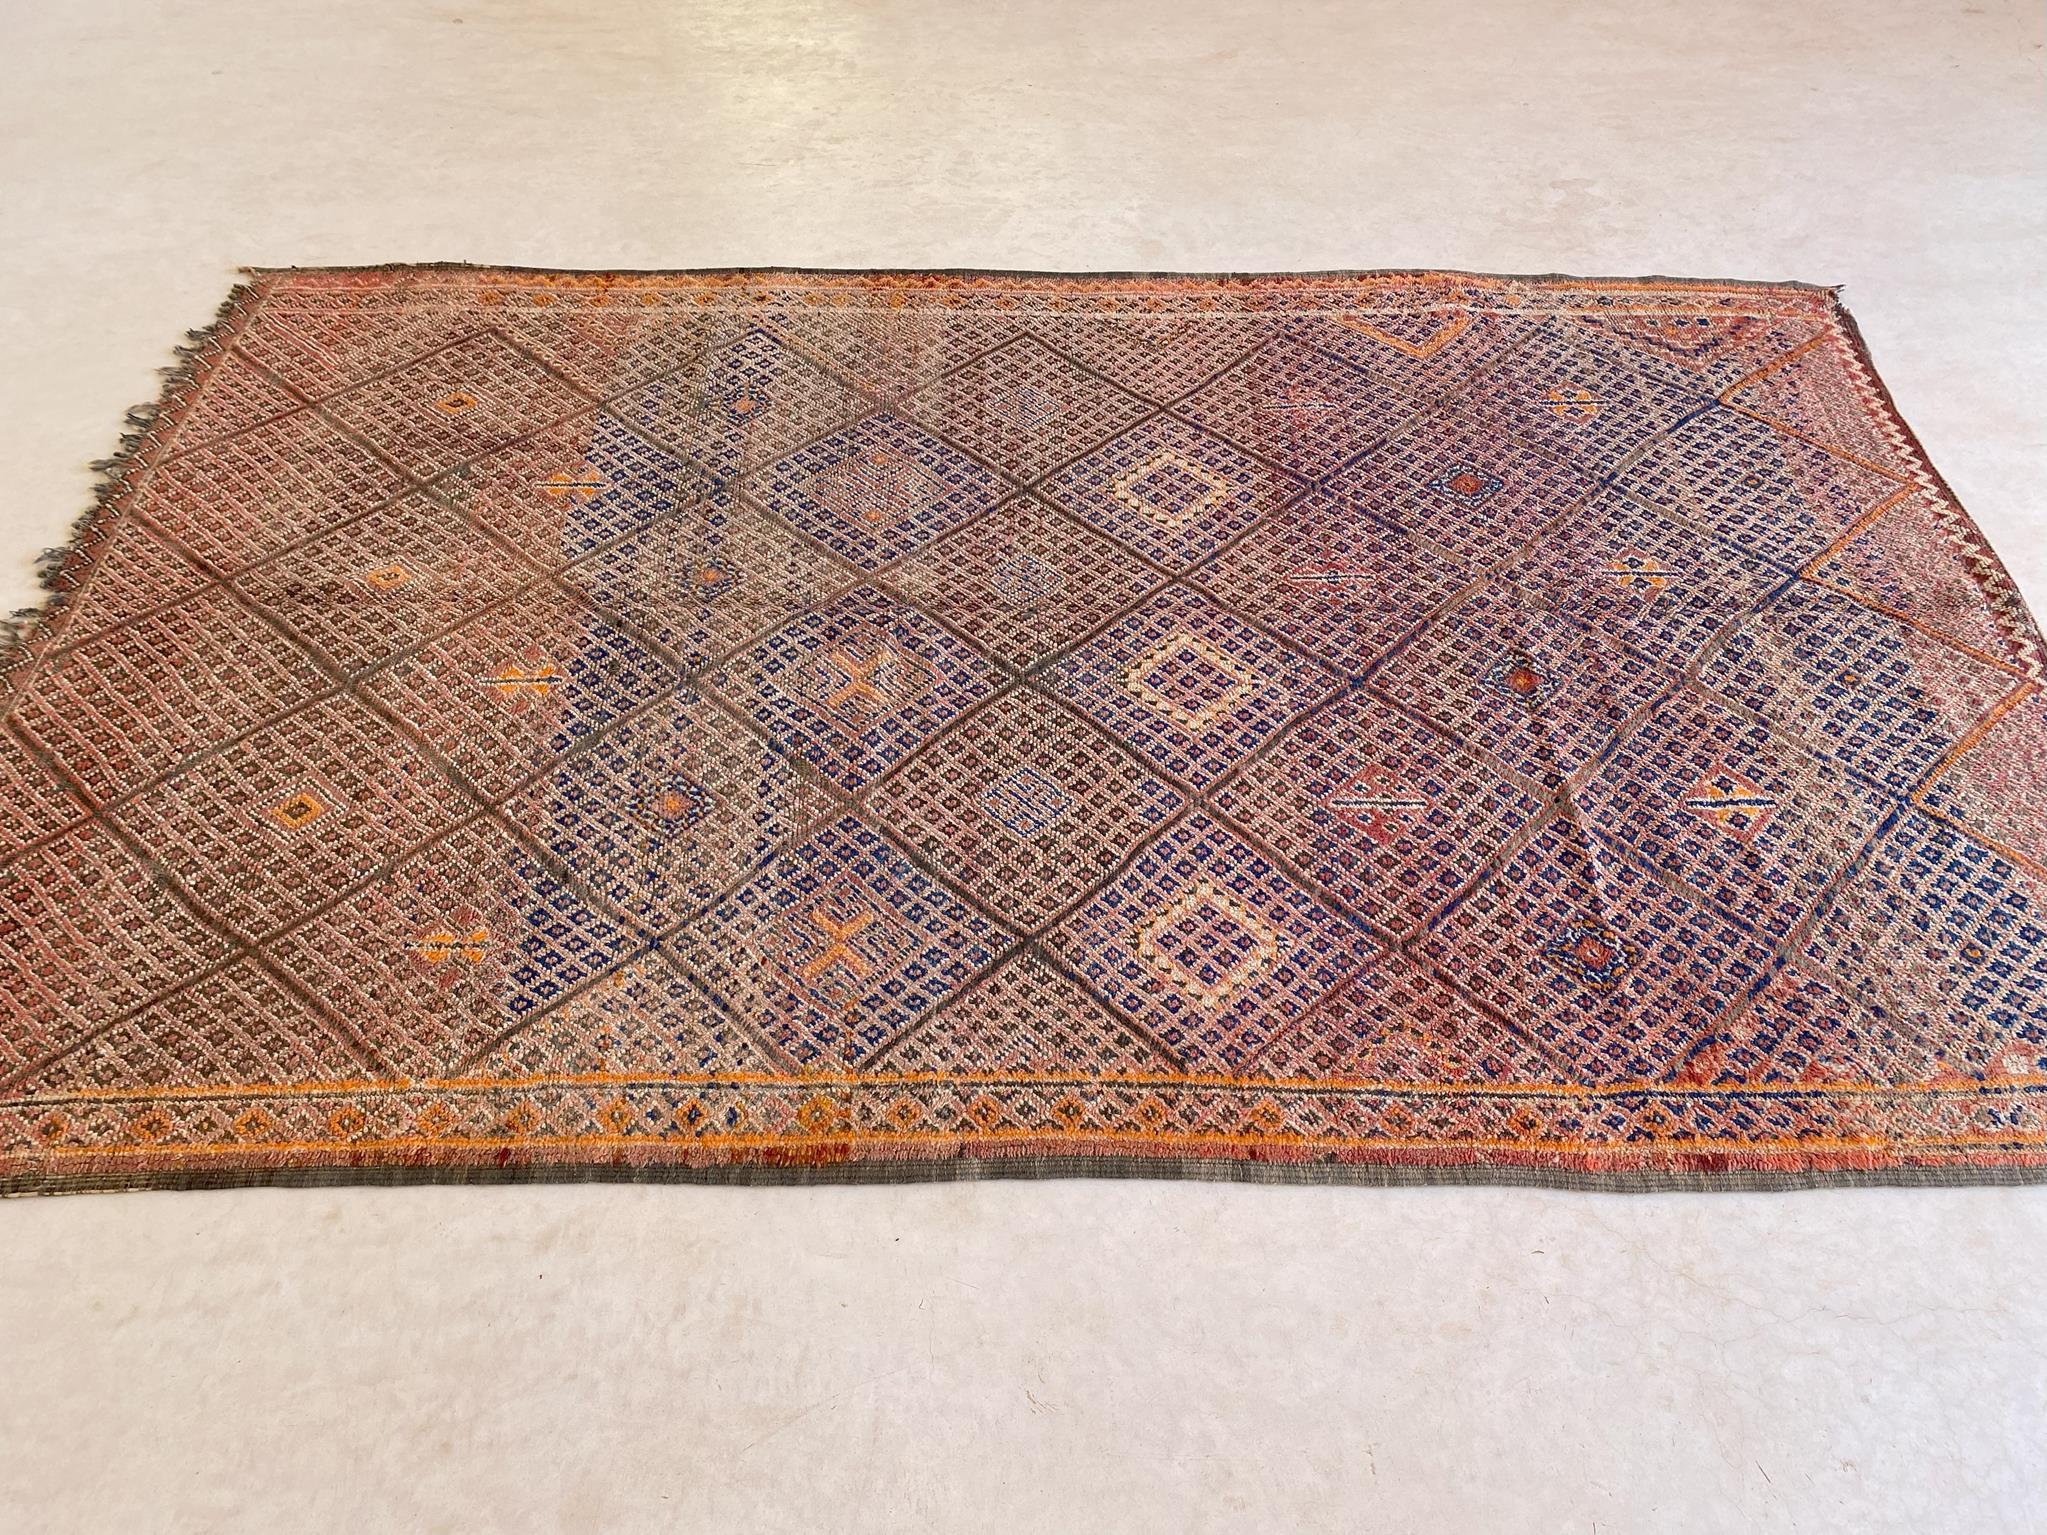 Tribal Vintage Beni Mguild rug - Orange/terracotta/blue - 6.1x9.8feet / 186x298cm For Sale